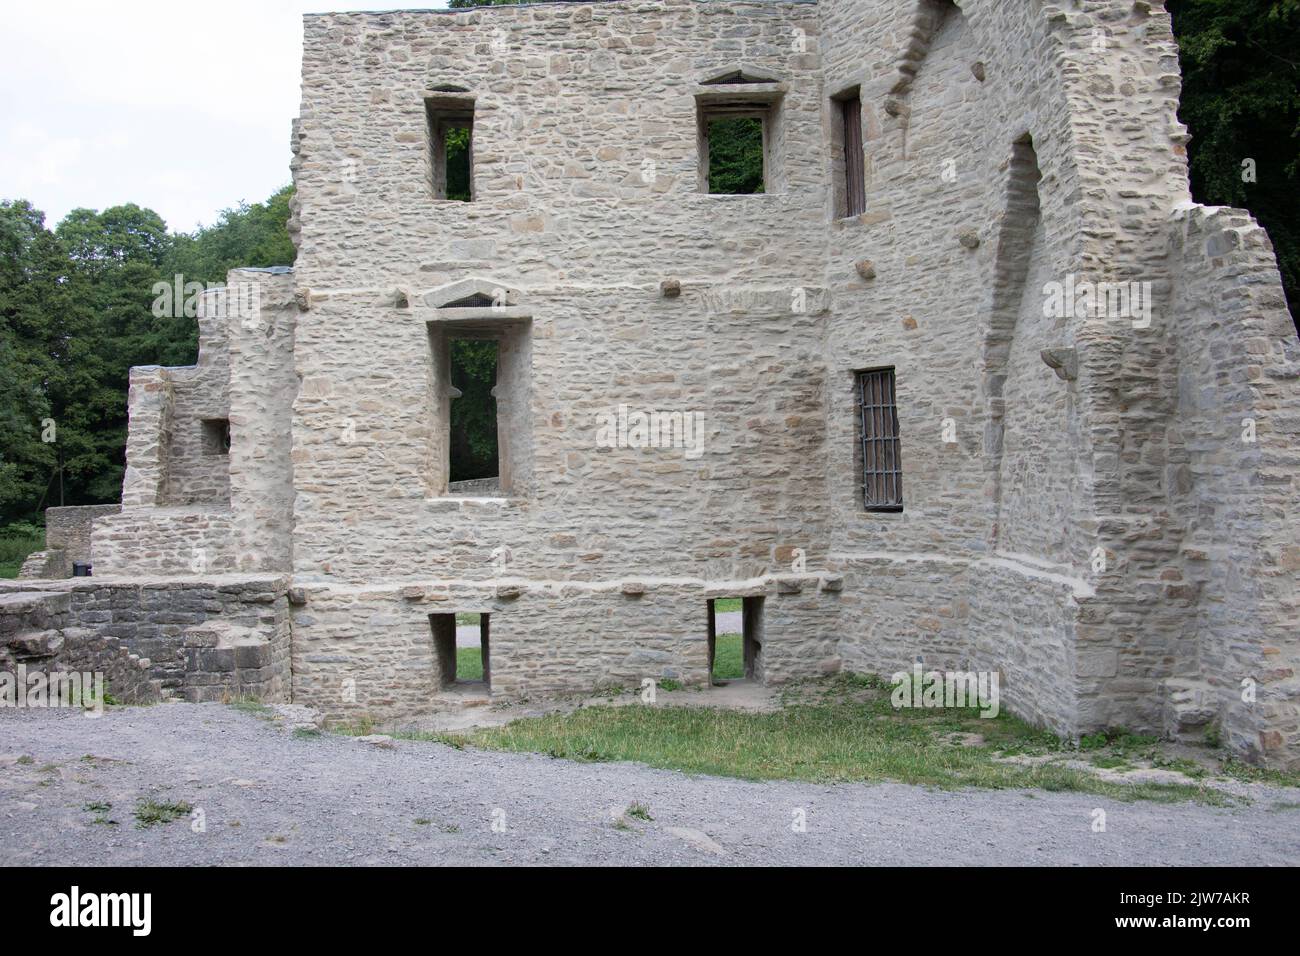 Castle ruin Hardenstein in Witten Stock Photo